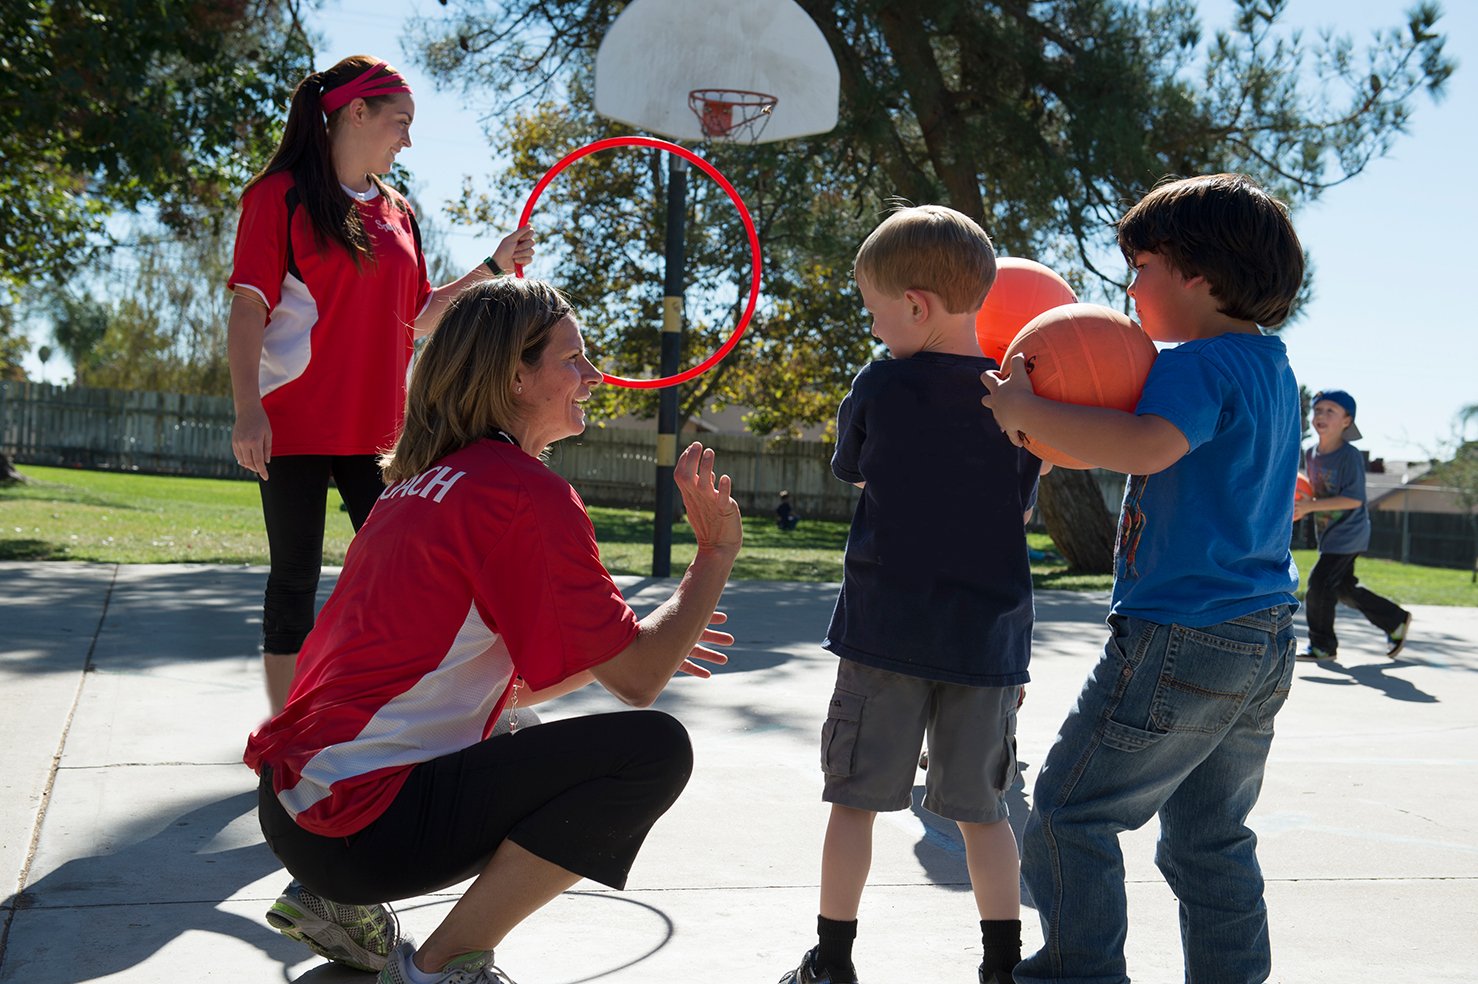 Sportball coach showing kids how to shoot a basketball.jpg